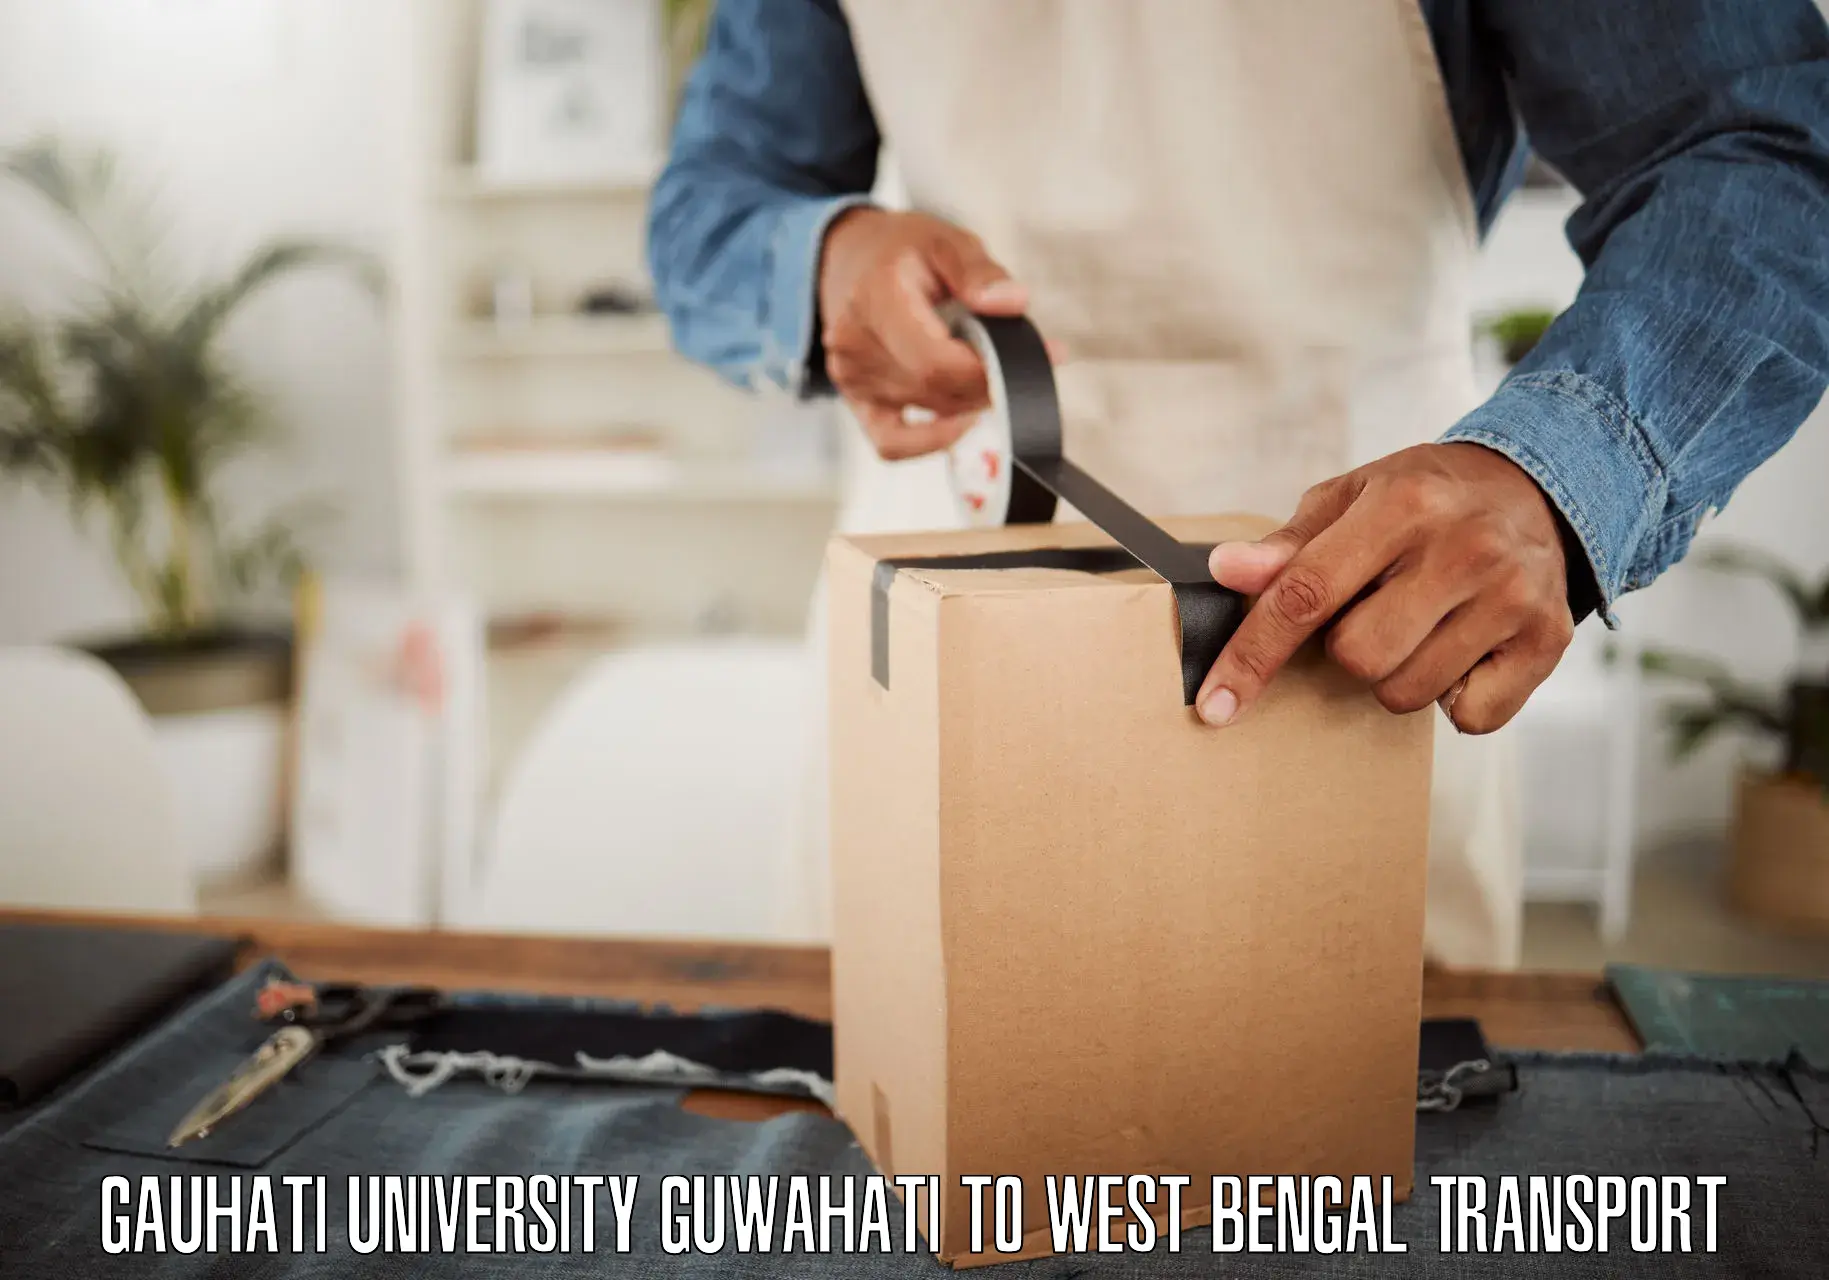 Bike transport service Gauhati University Guwahati to West Bengal